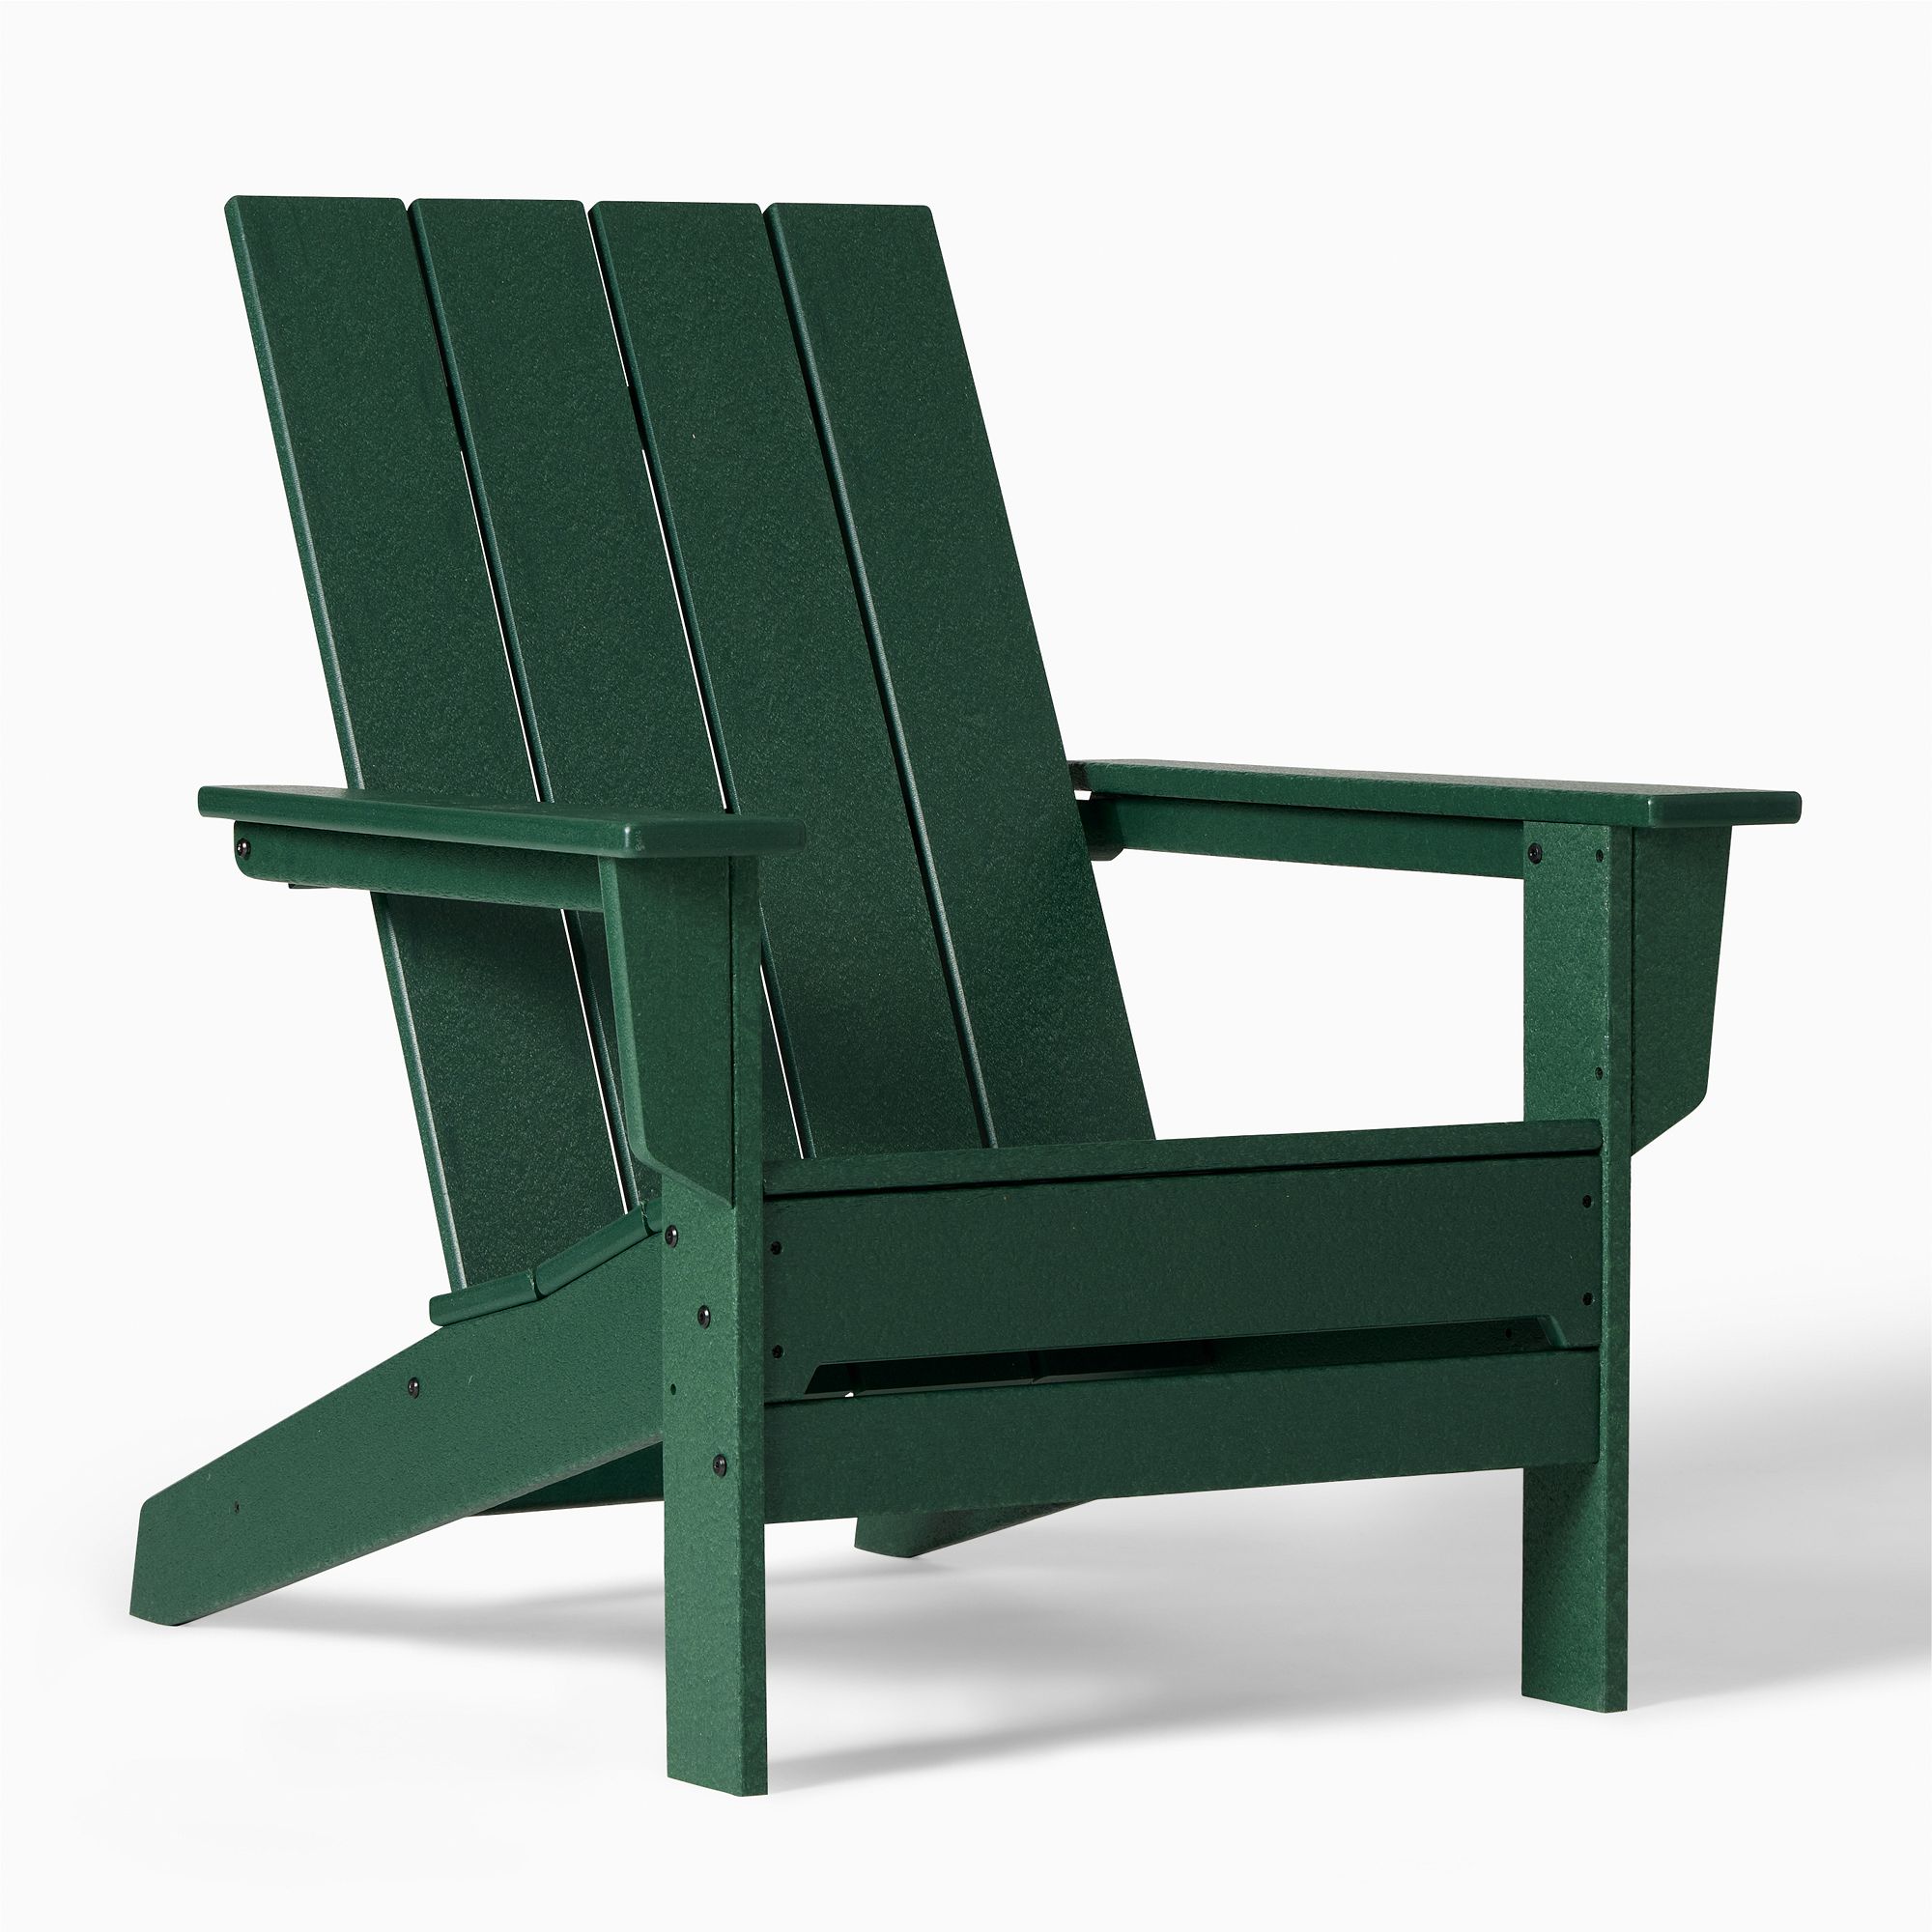 West Elm + Polywood Modern Adirondack Chair |